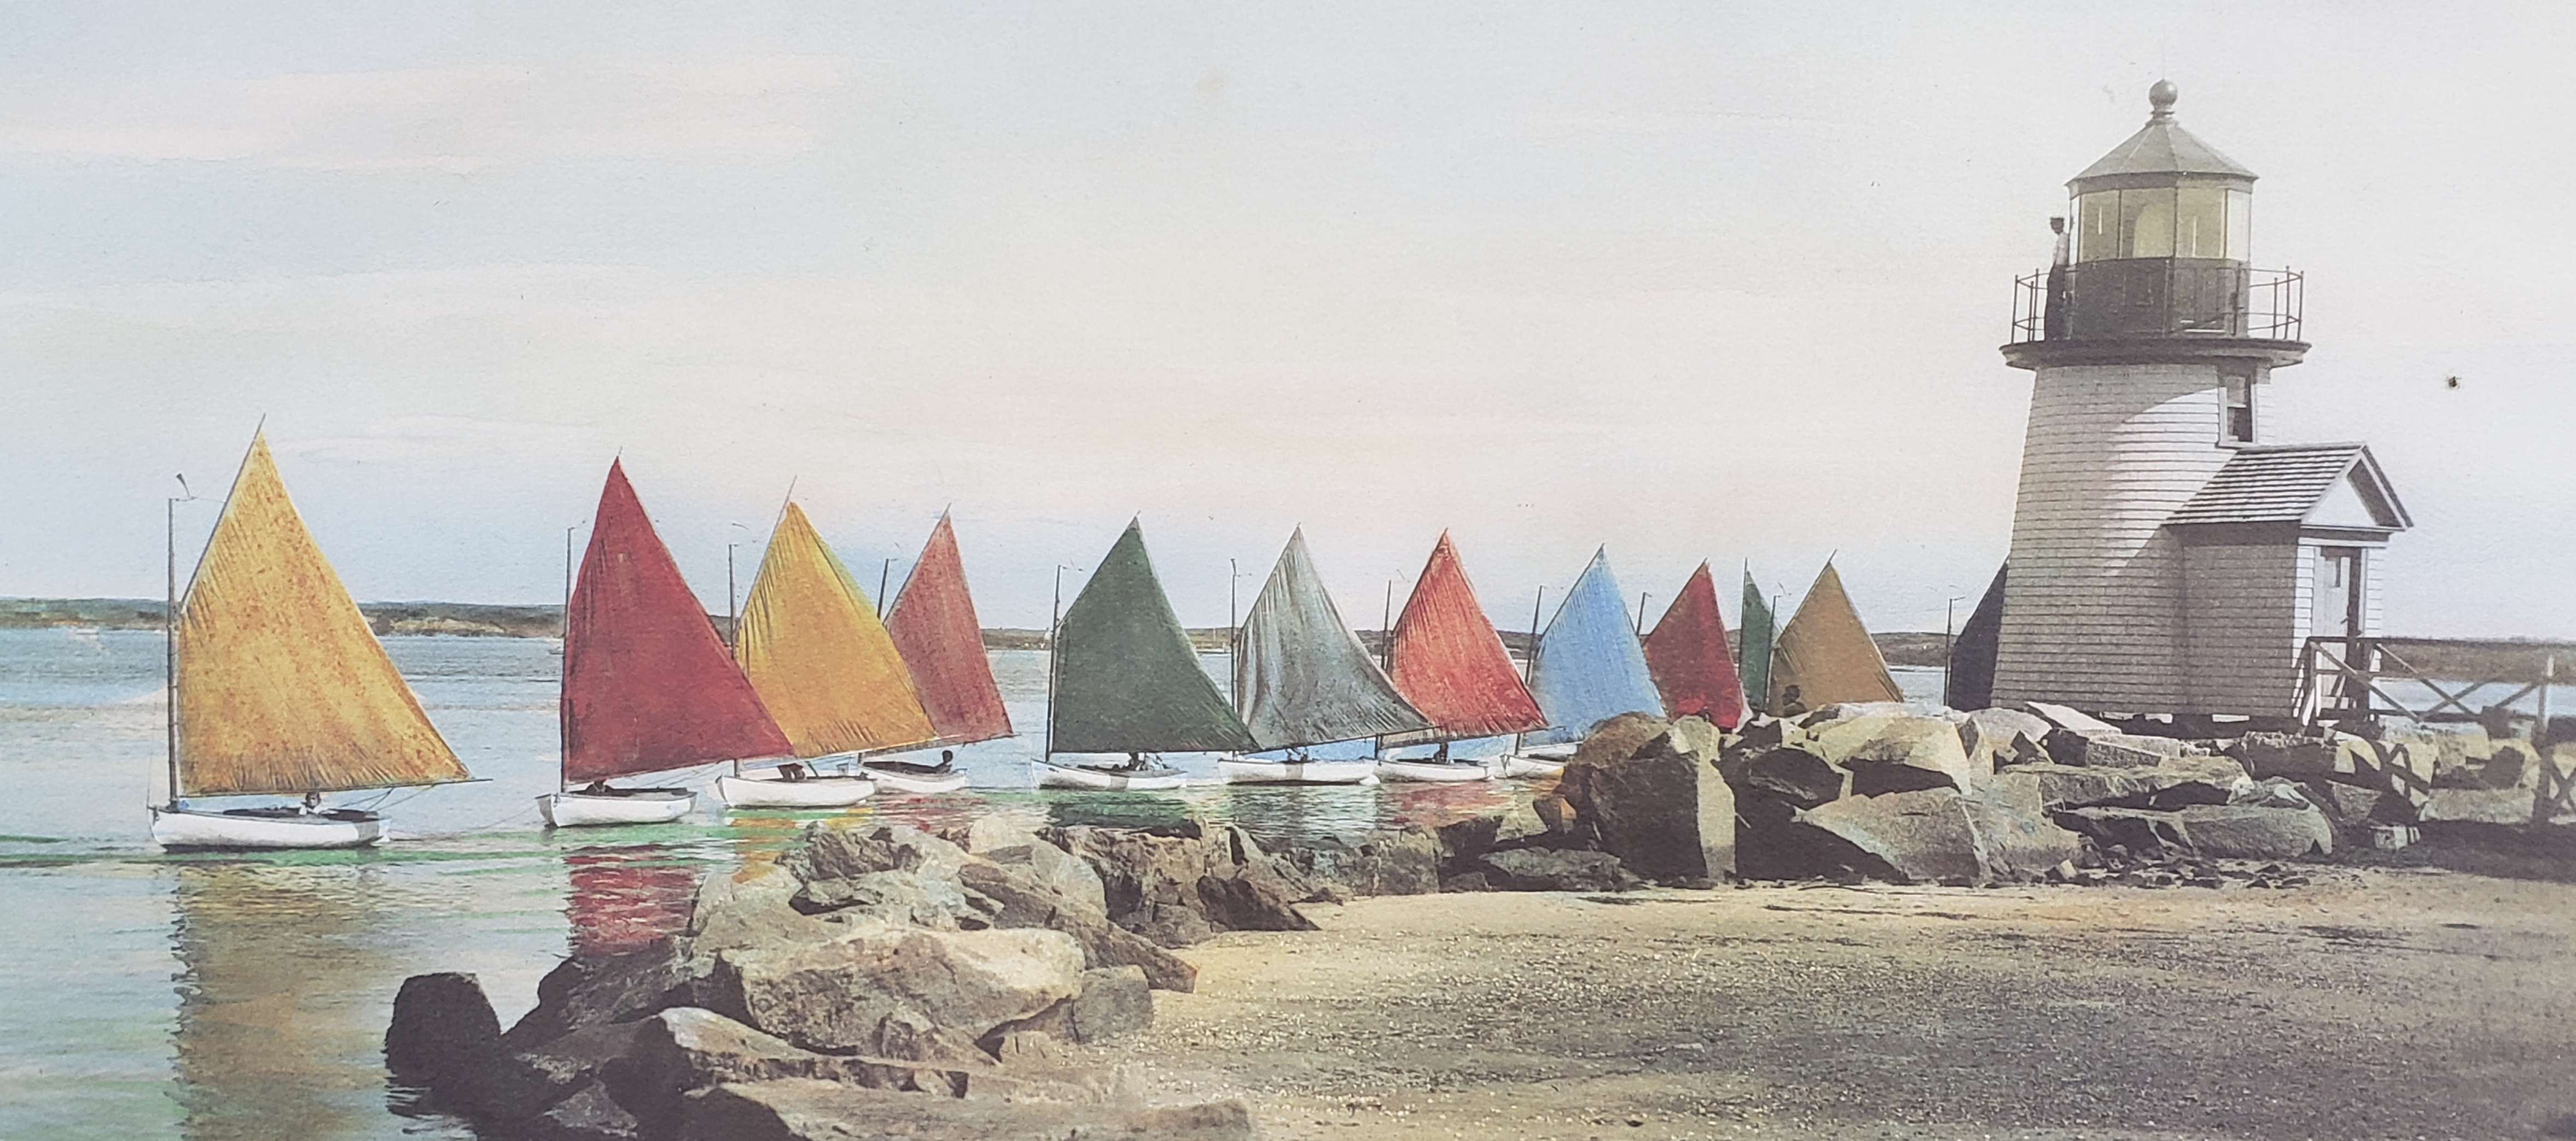 Vintage Marshall Dubock Print , “Rainbow Fleet Nantucket”, 20th Century